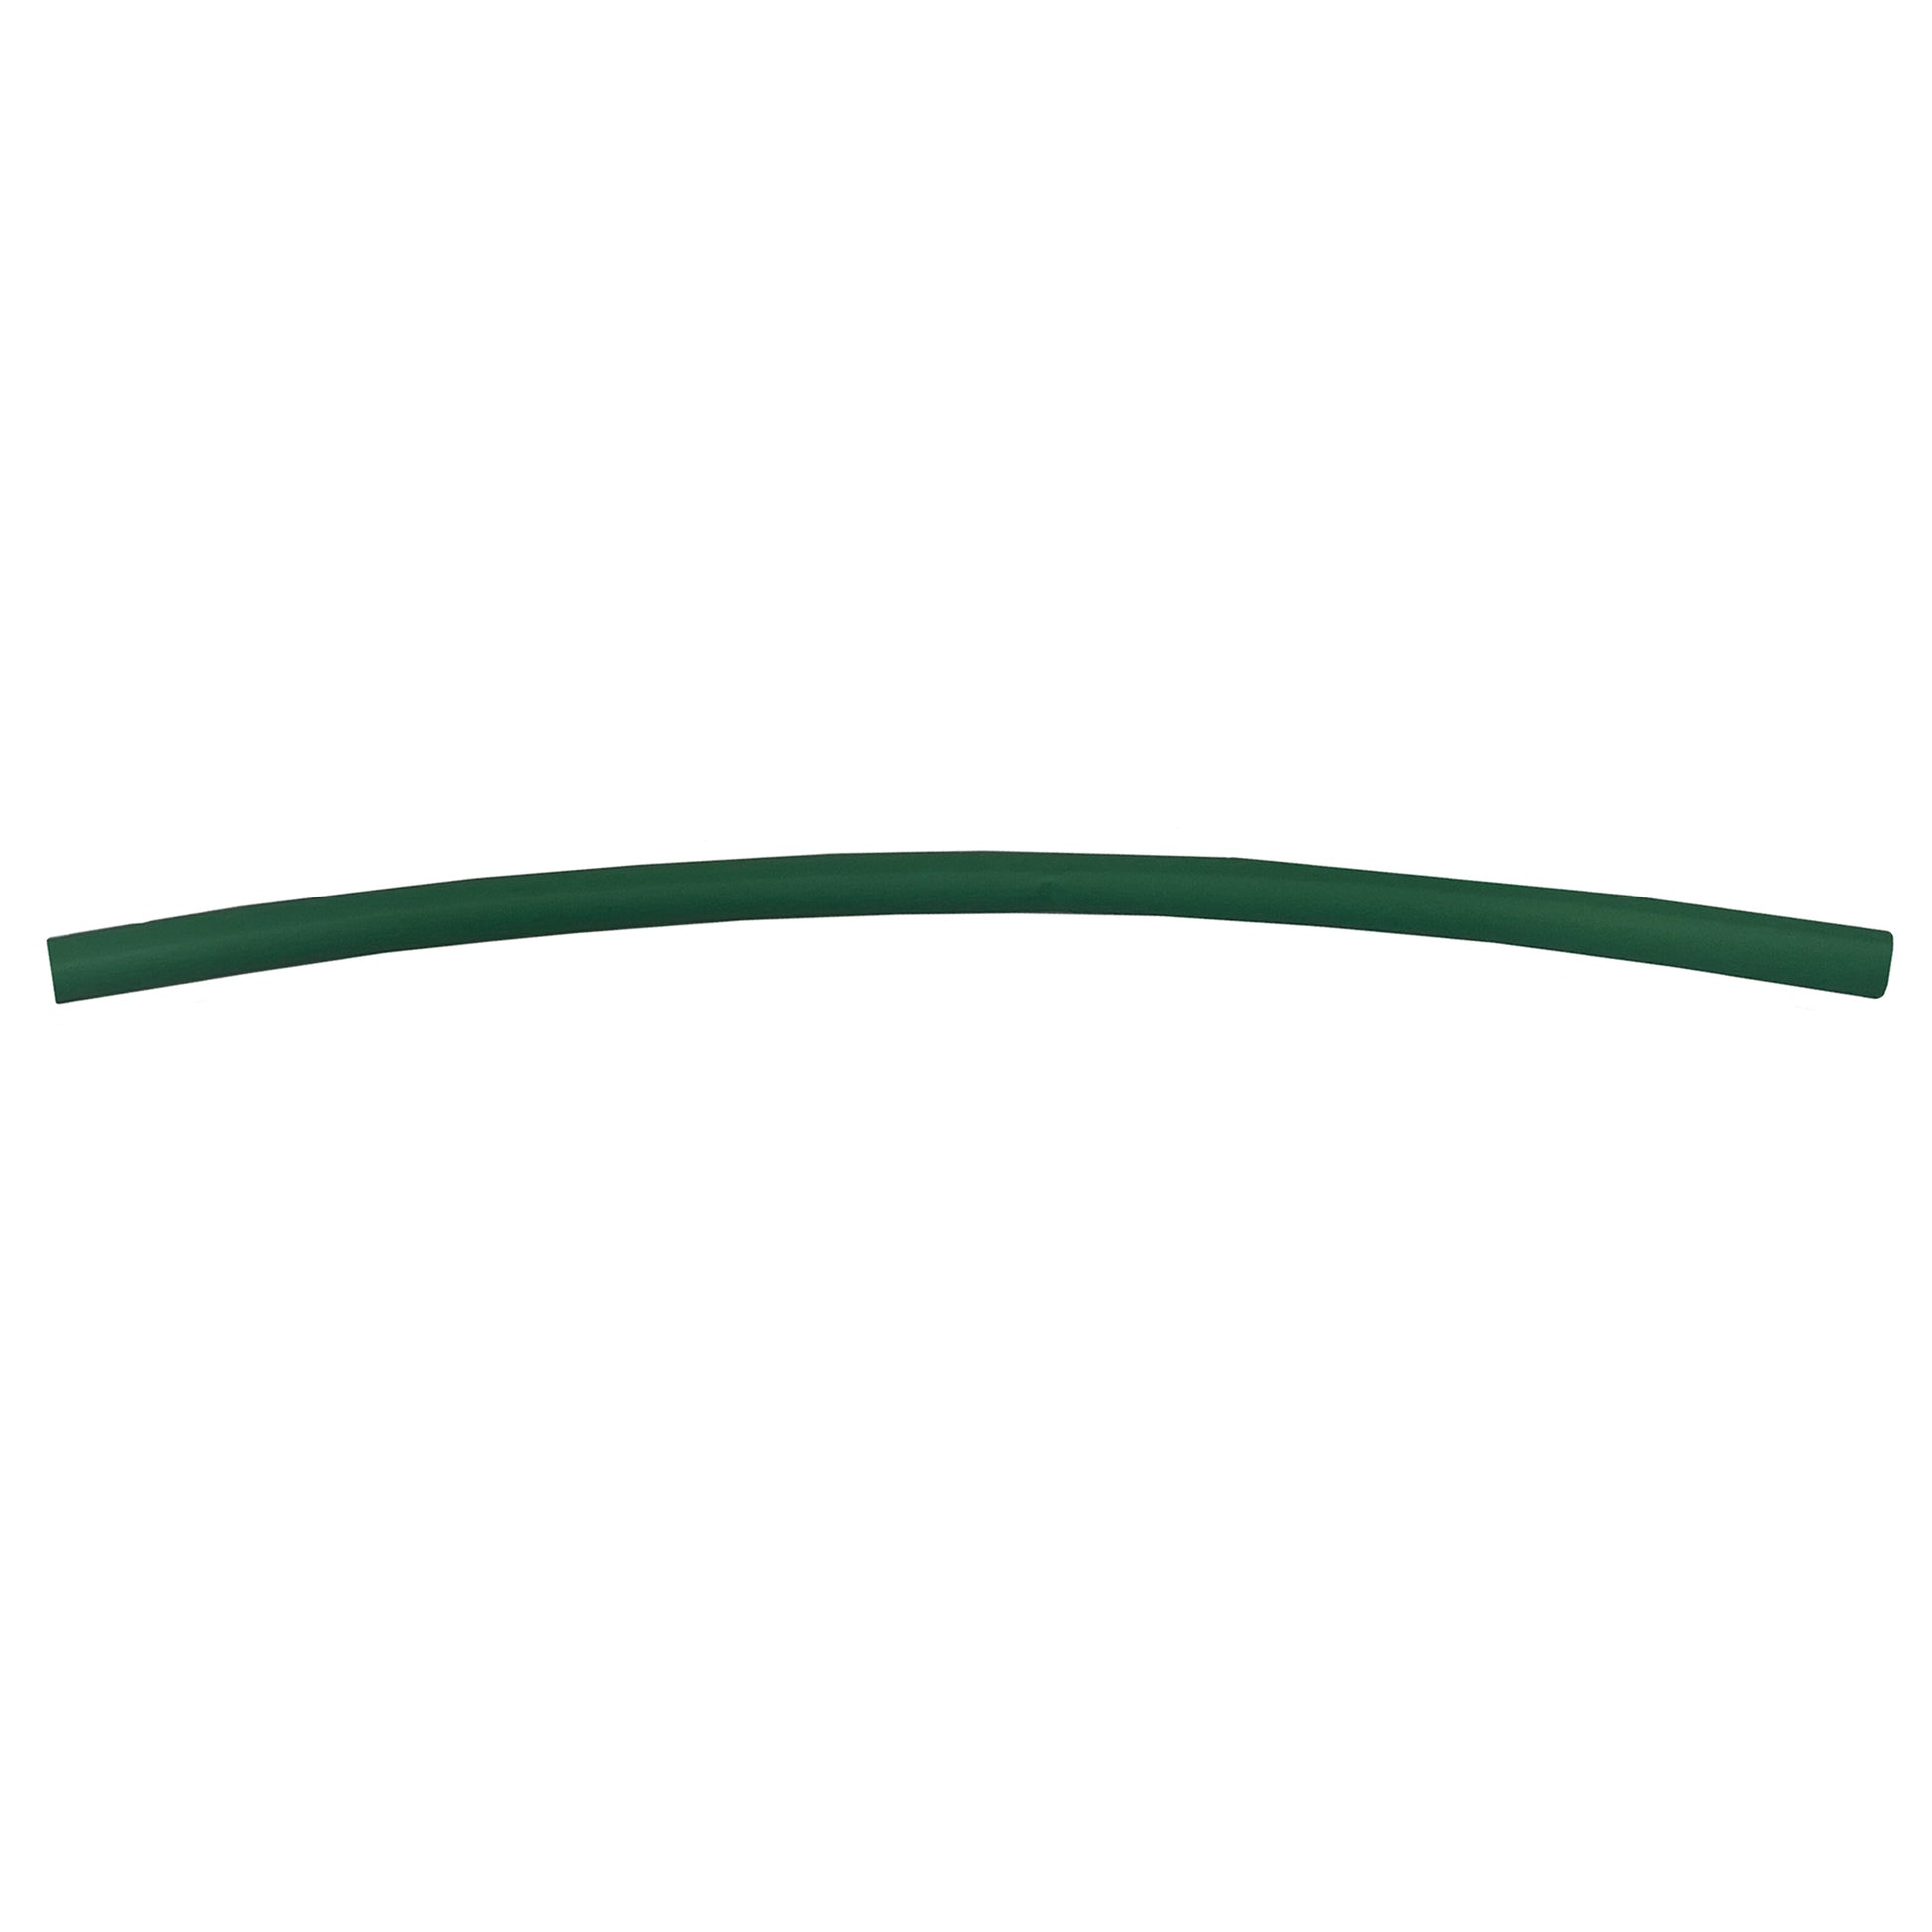 Flexible Thin Single Wall Non-Adhesive Heat Shrink Tubing 2:1 Green 3/16" ID - 12" Inch 10 Pack